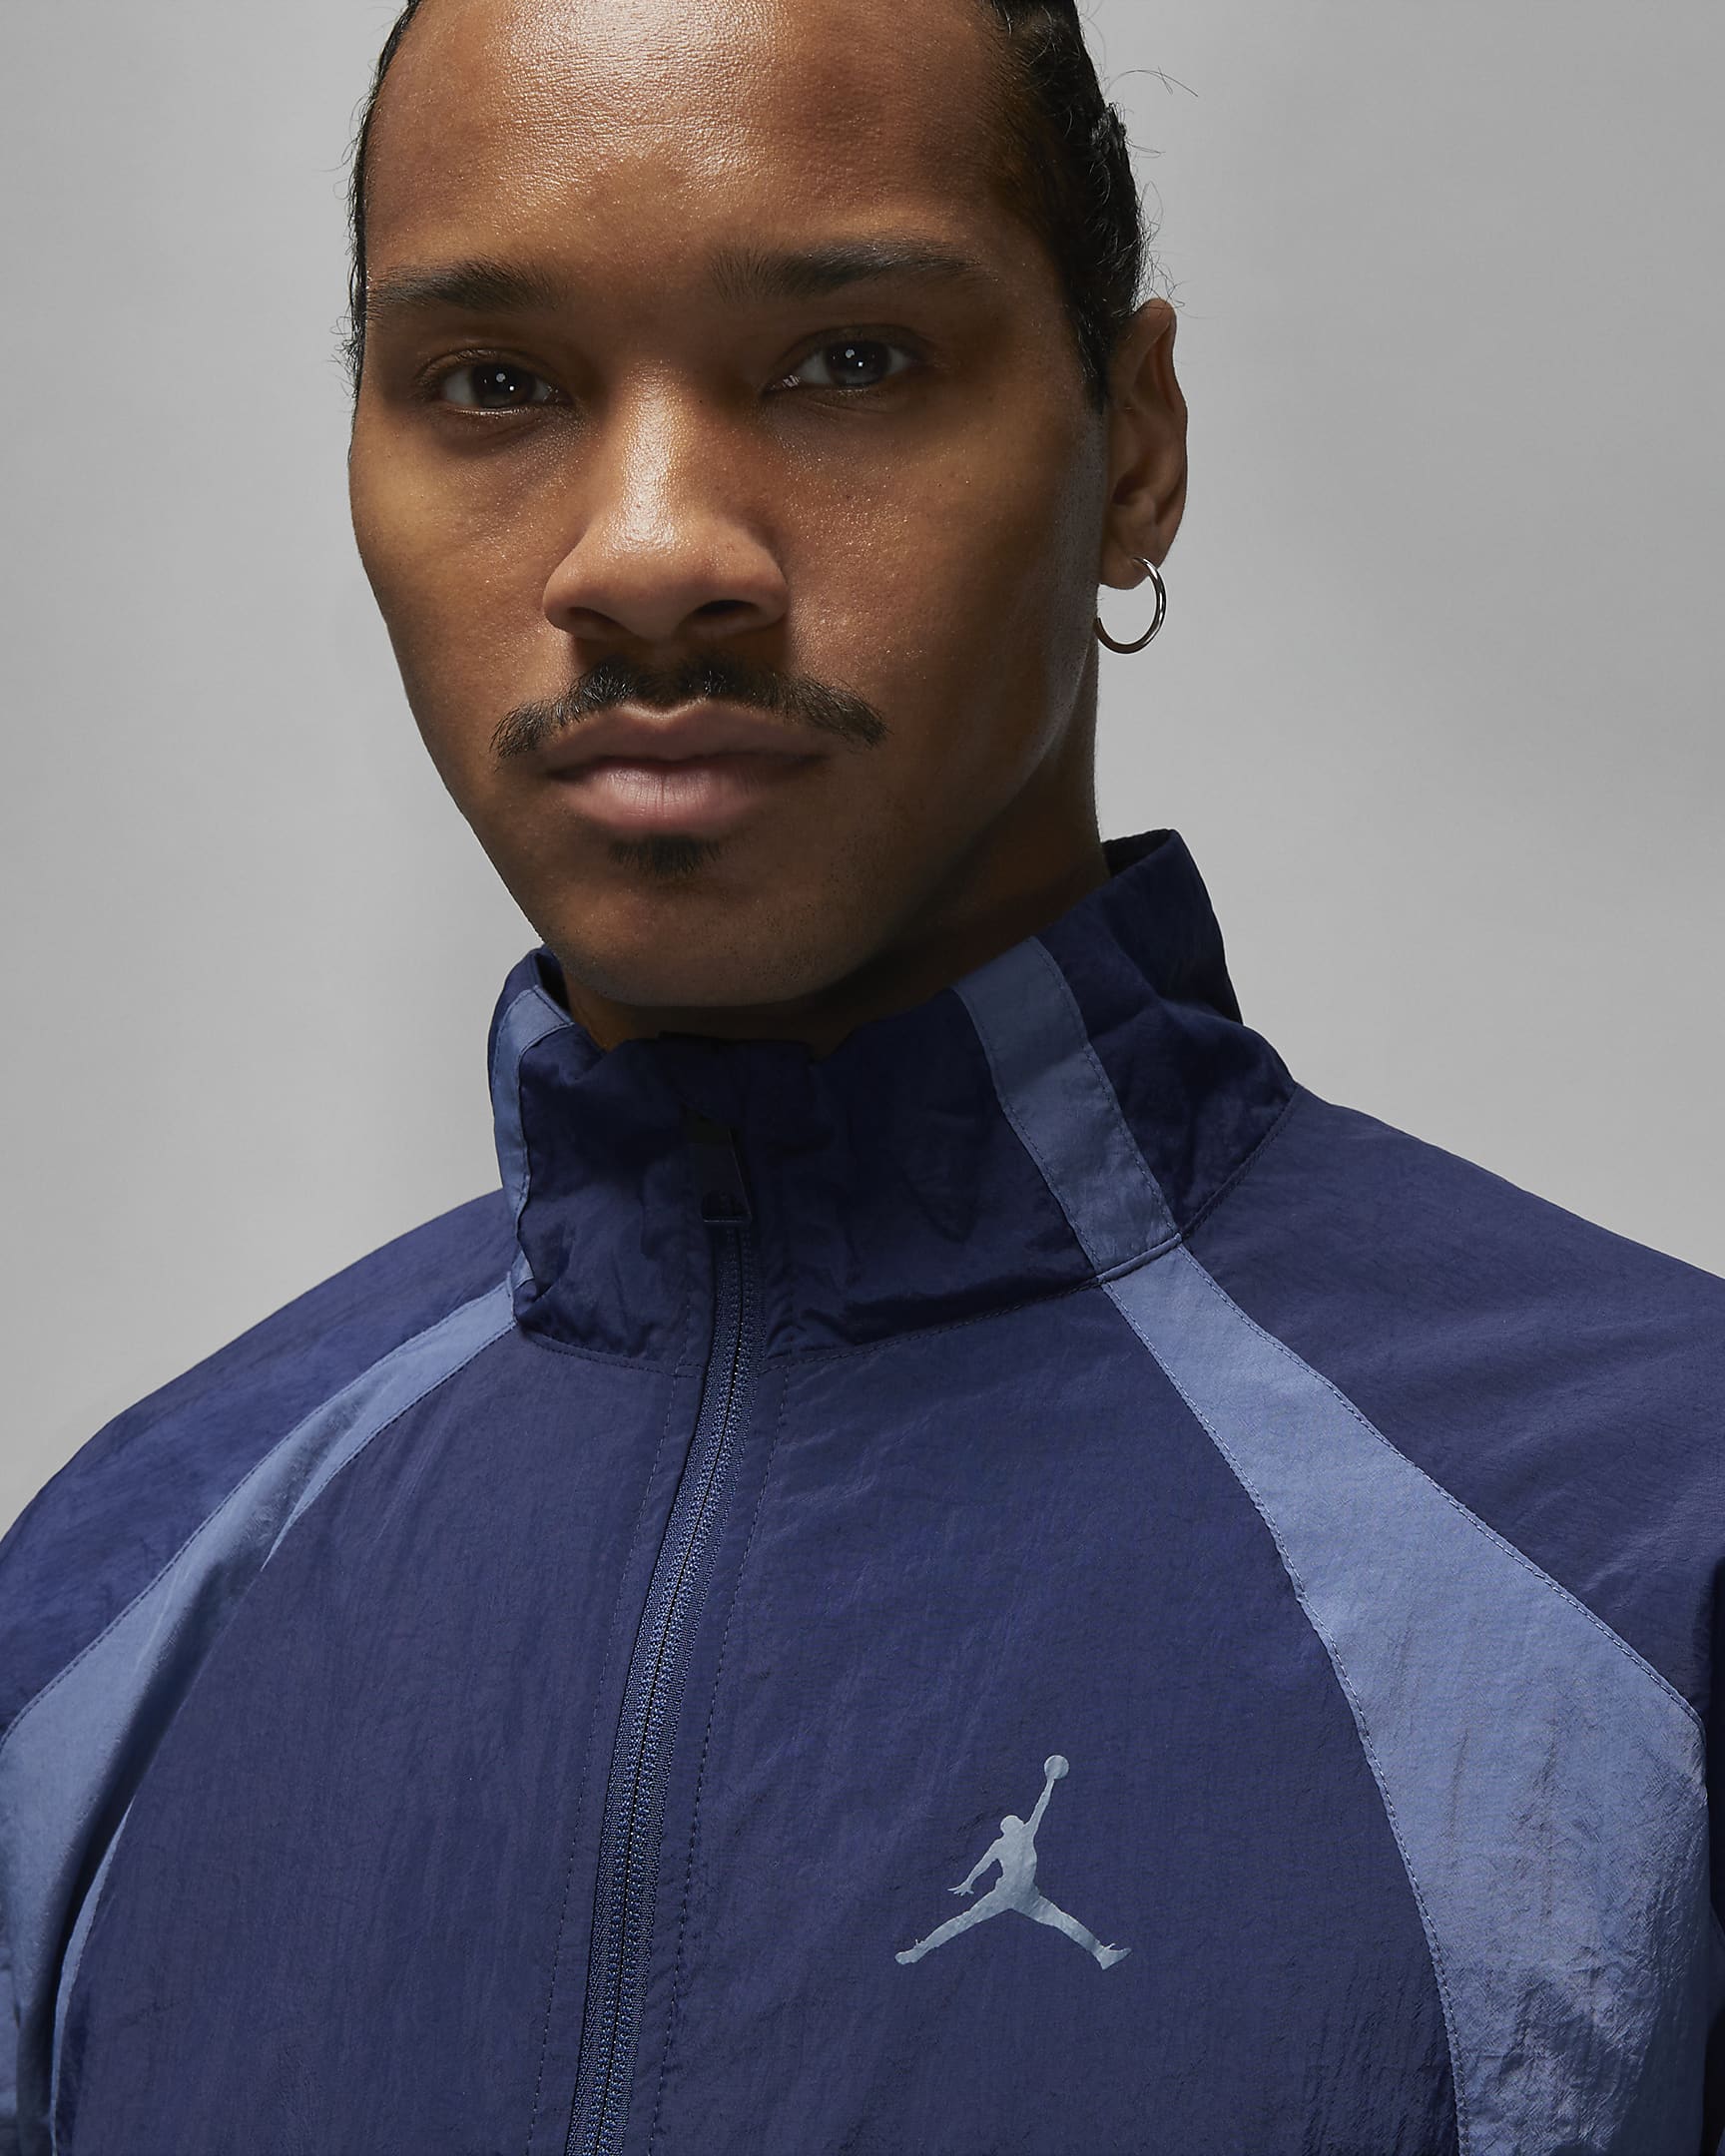 Jordan Sport Jam Warm-Up Jacket. Nike UK